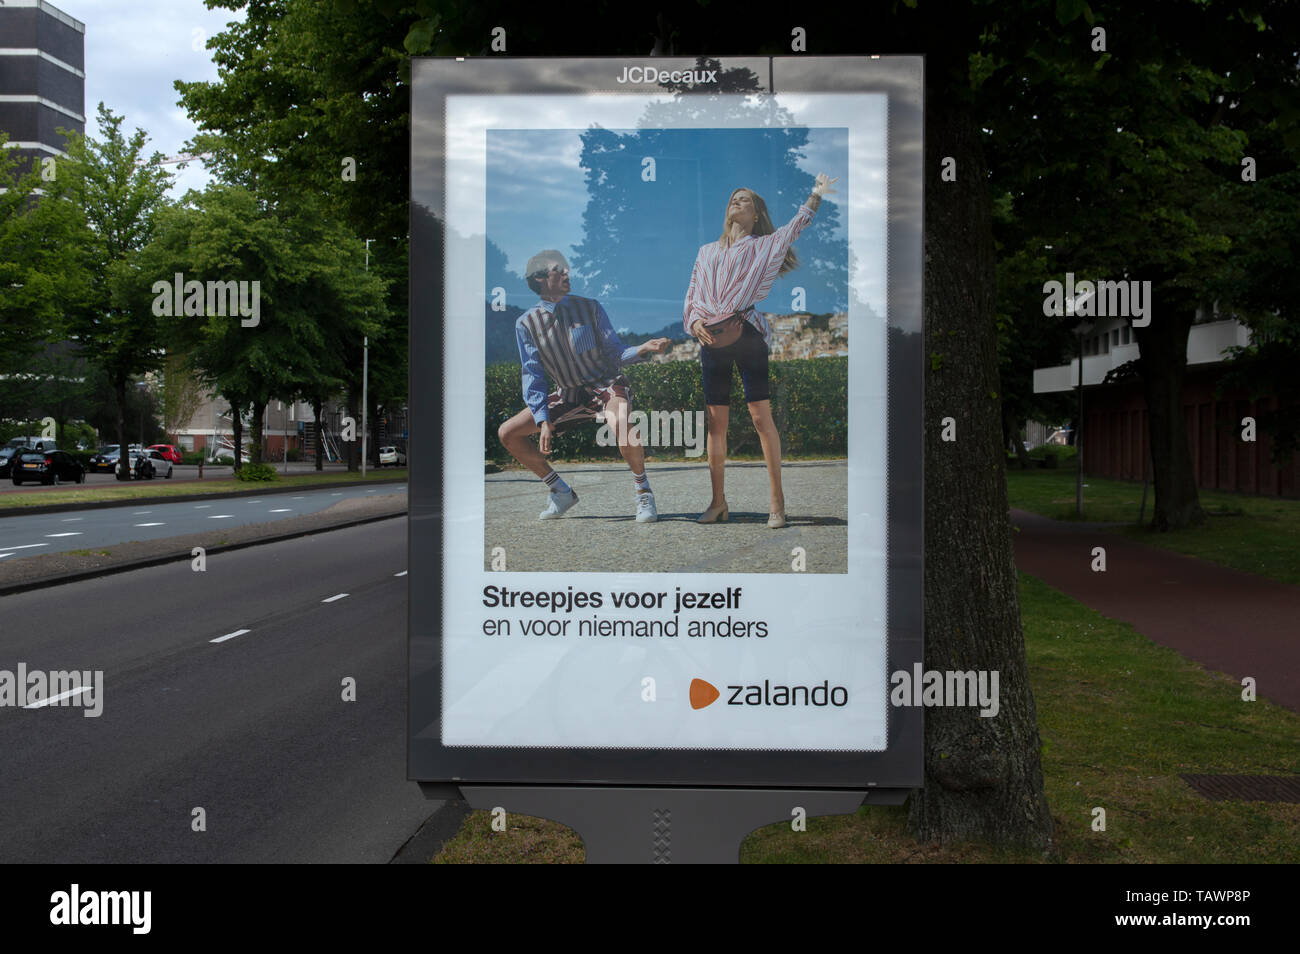 Billboard Zalando At Amsterdam The Netherlands 2019 Stock Photo - Alamy